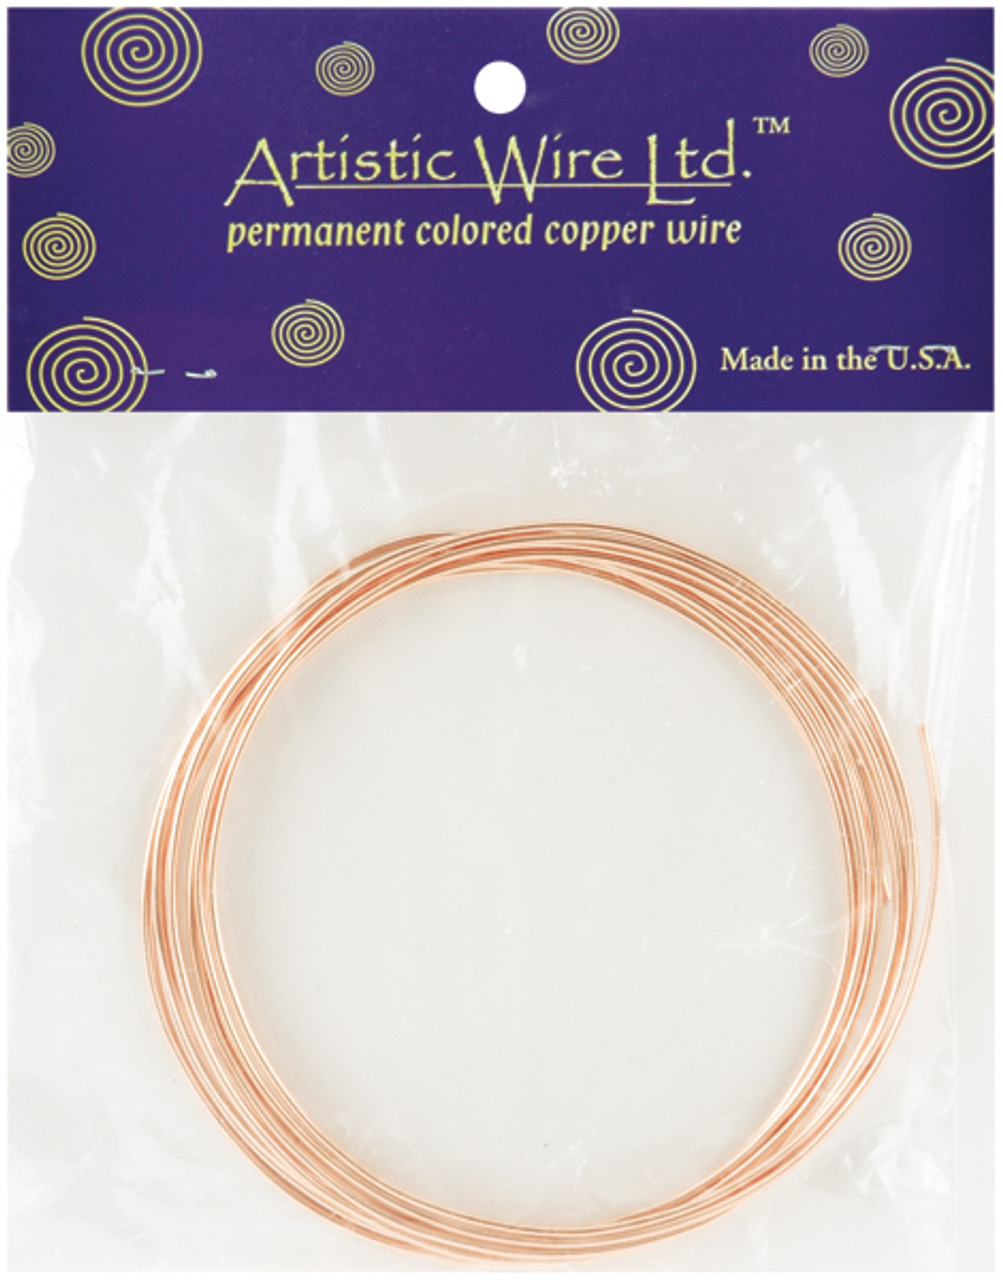 Artistic Wire 22 Gauge 8yd Bare Copper - Tarnishable